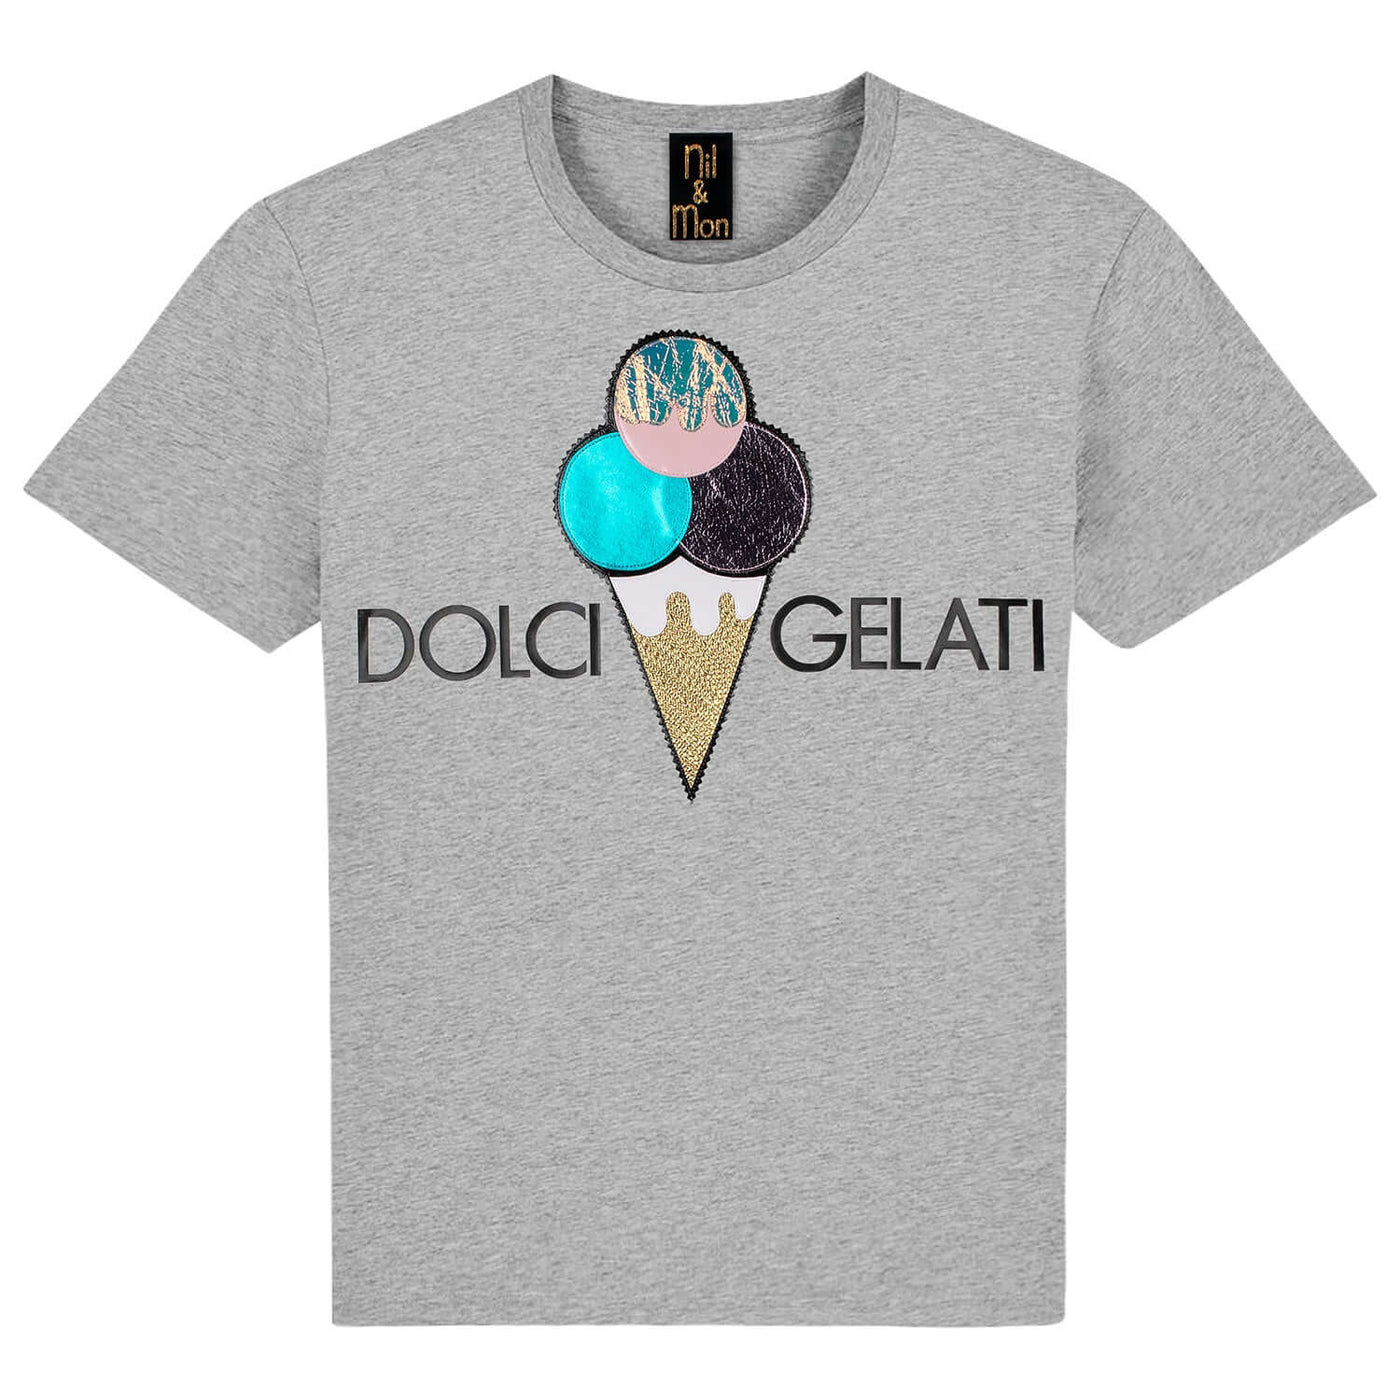 T-Shirt "Dolci Gelati" - heather grey 